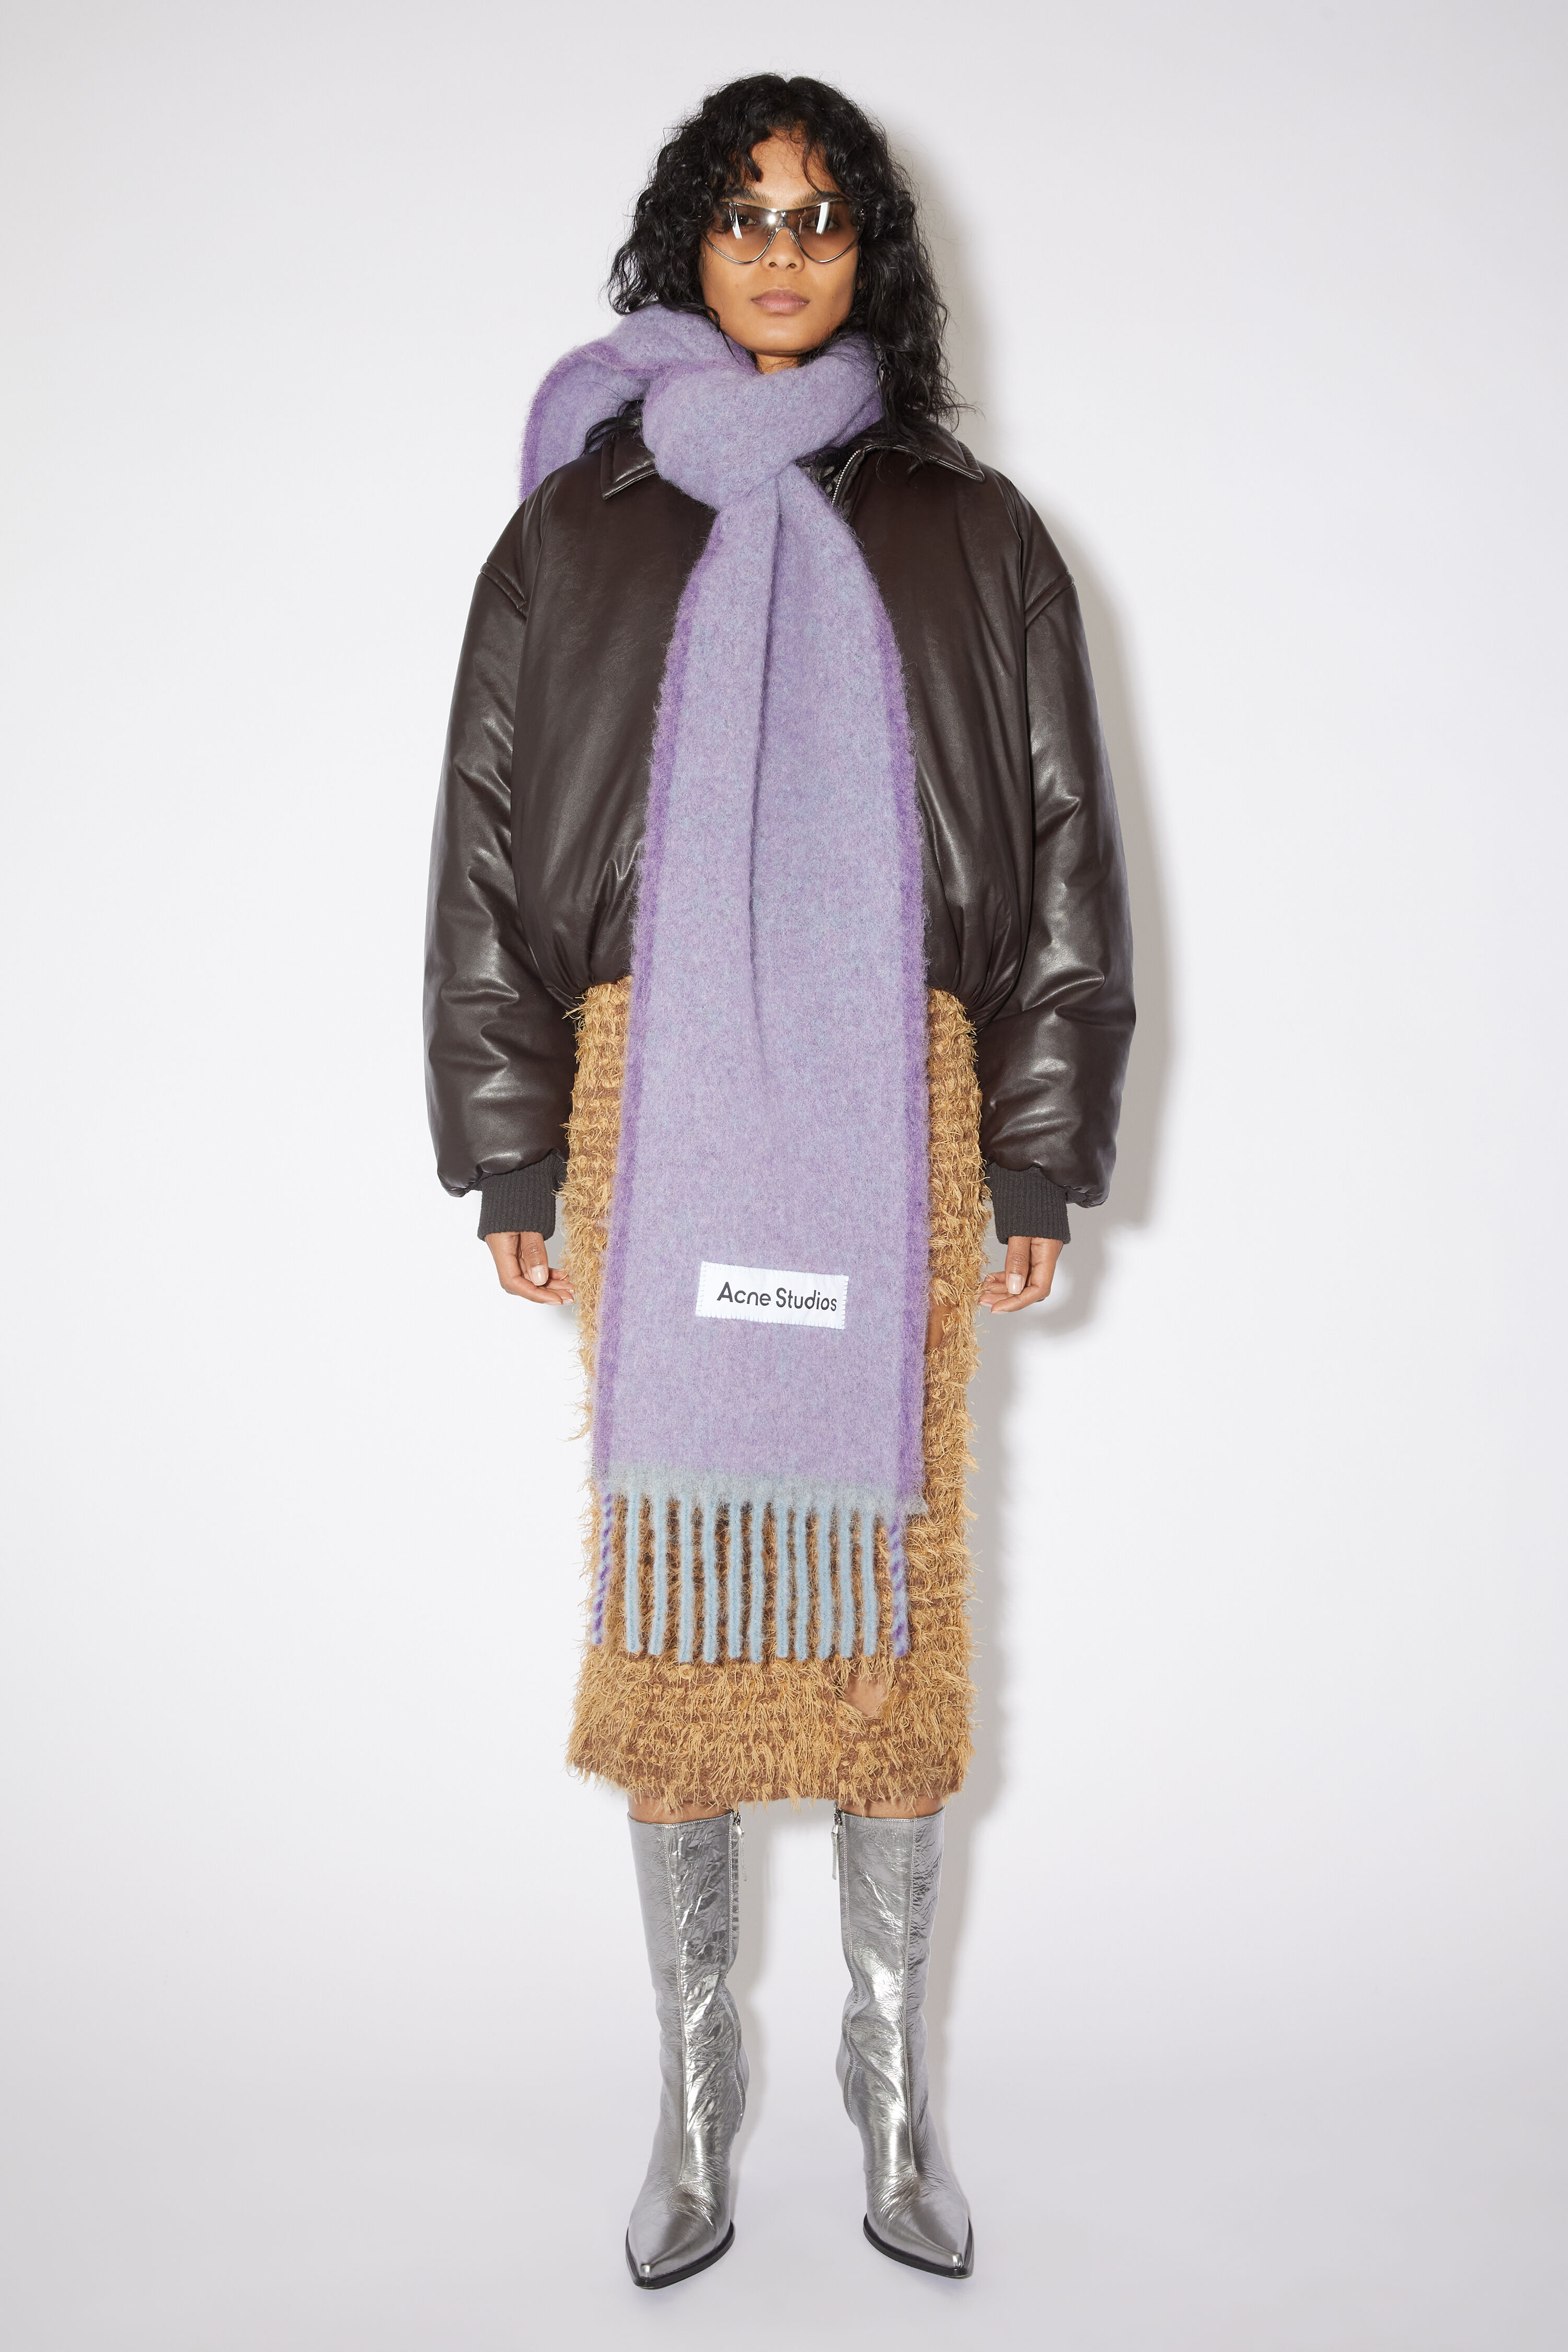 Acne Studios - Wool mohair scarf - Narrow - Lavender purple